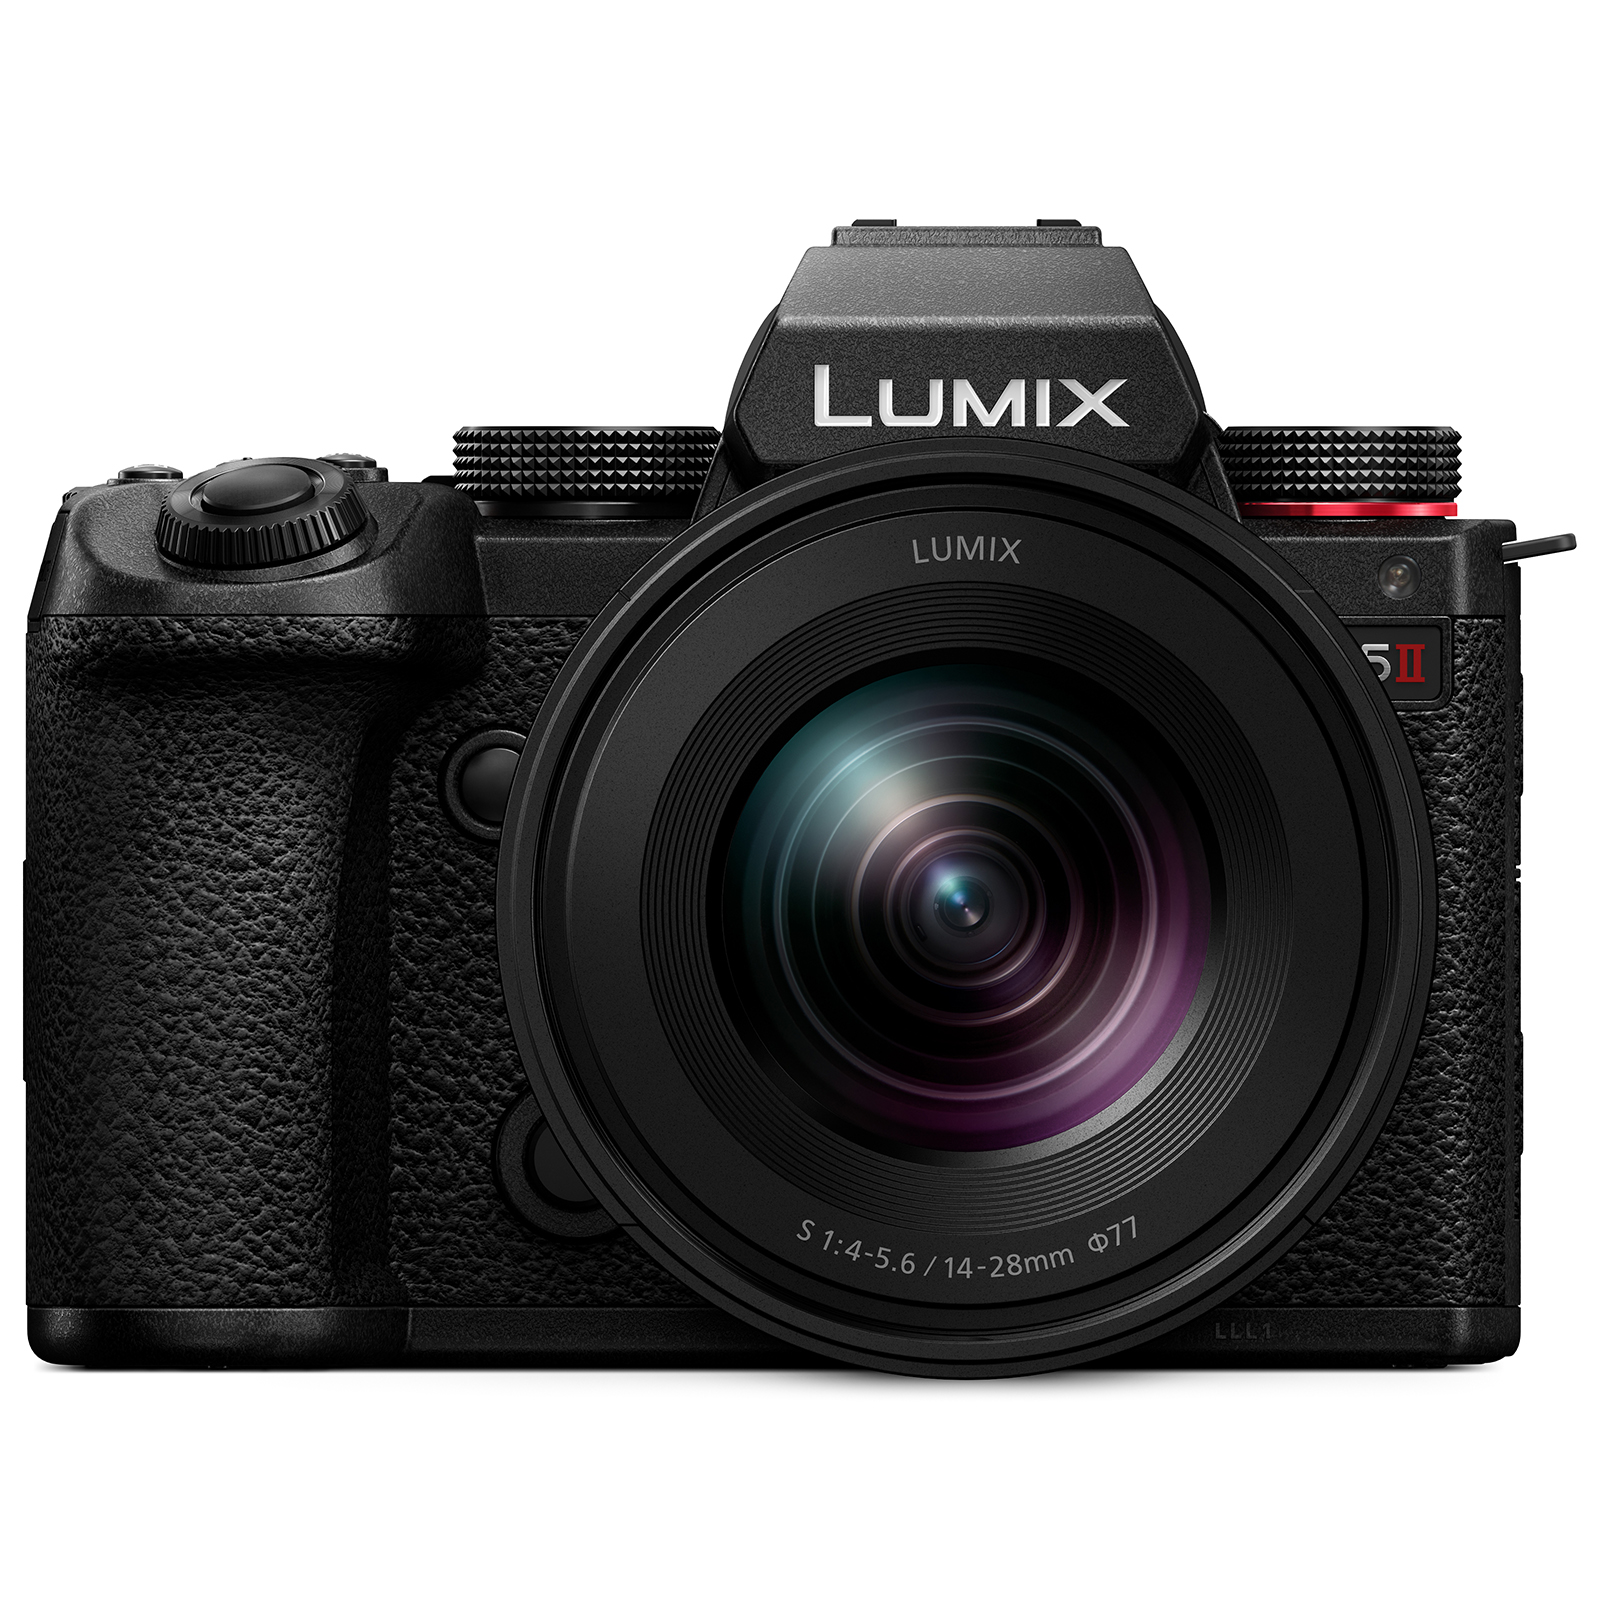 Image of Panasonic Lumix S5 II Digital Camera with 1428mm Lens